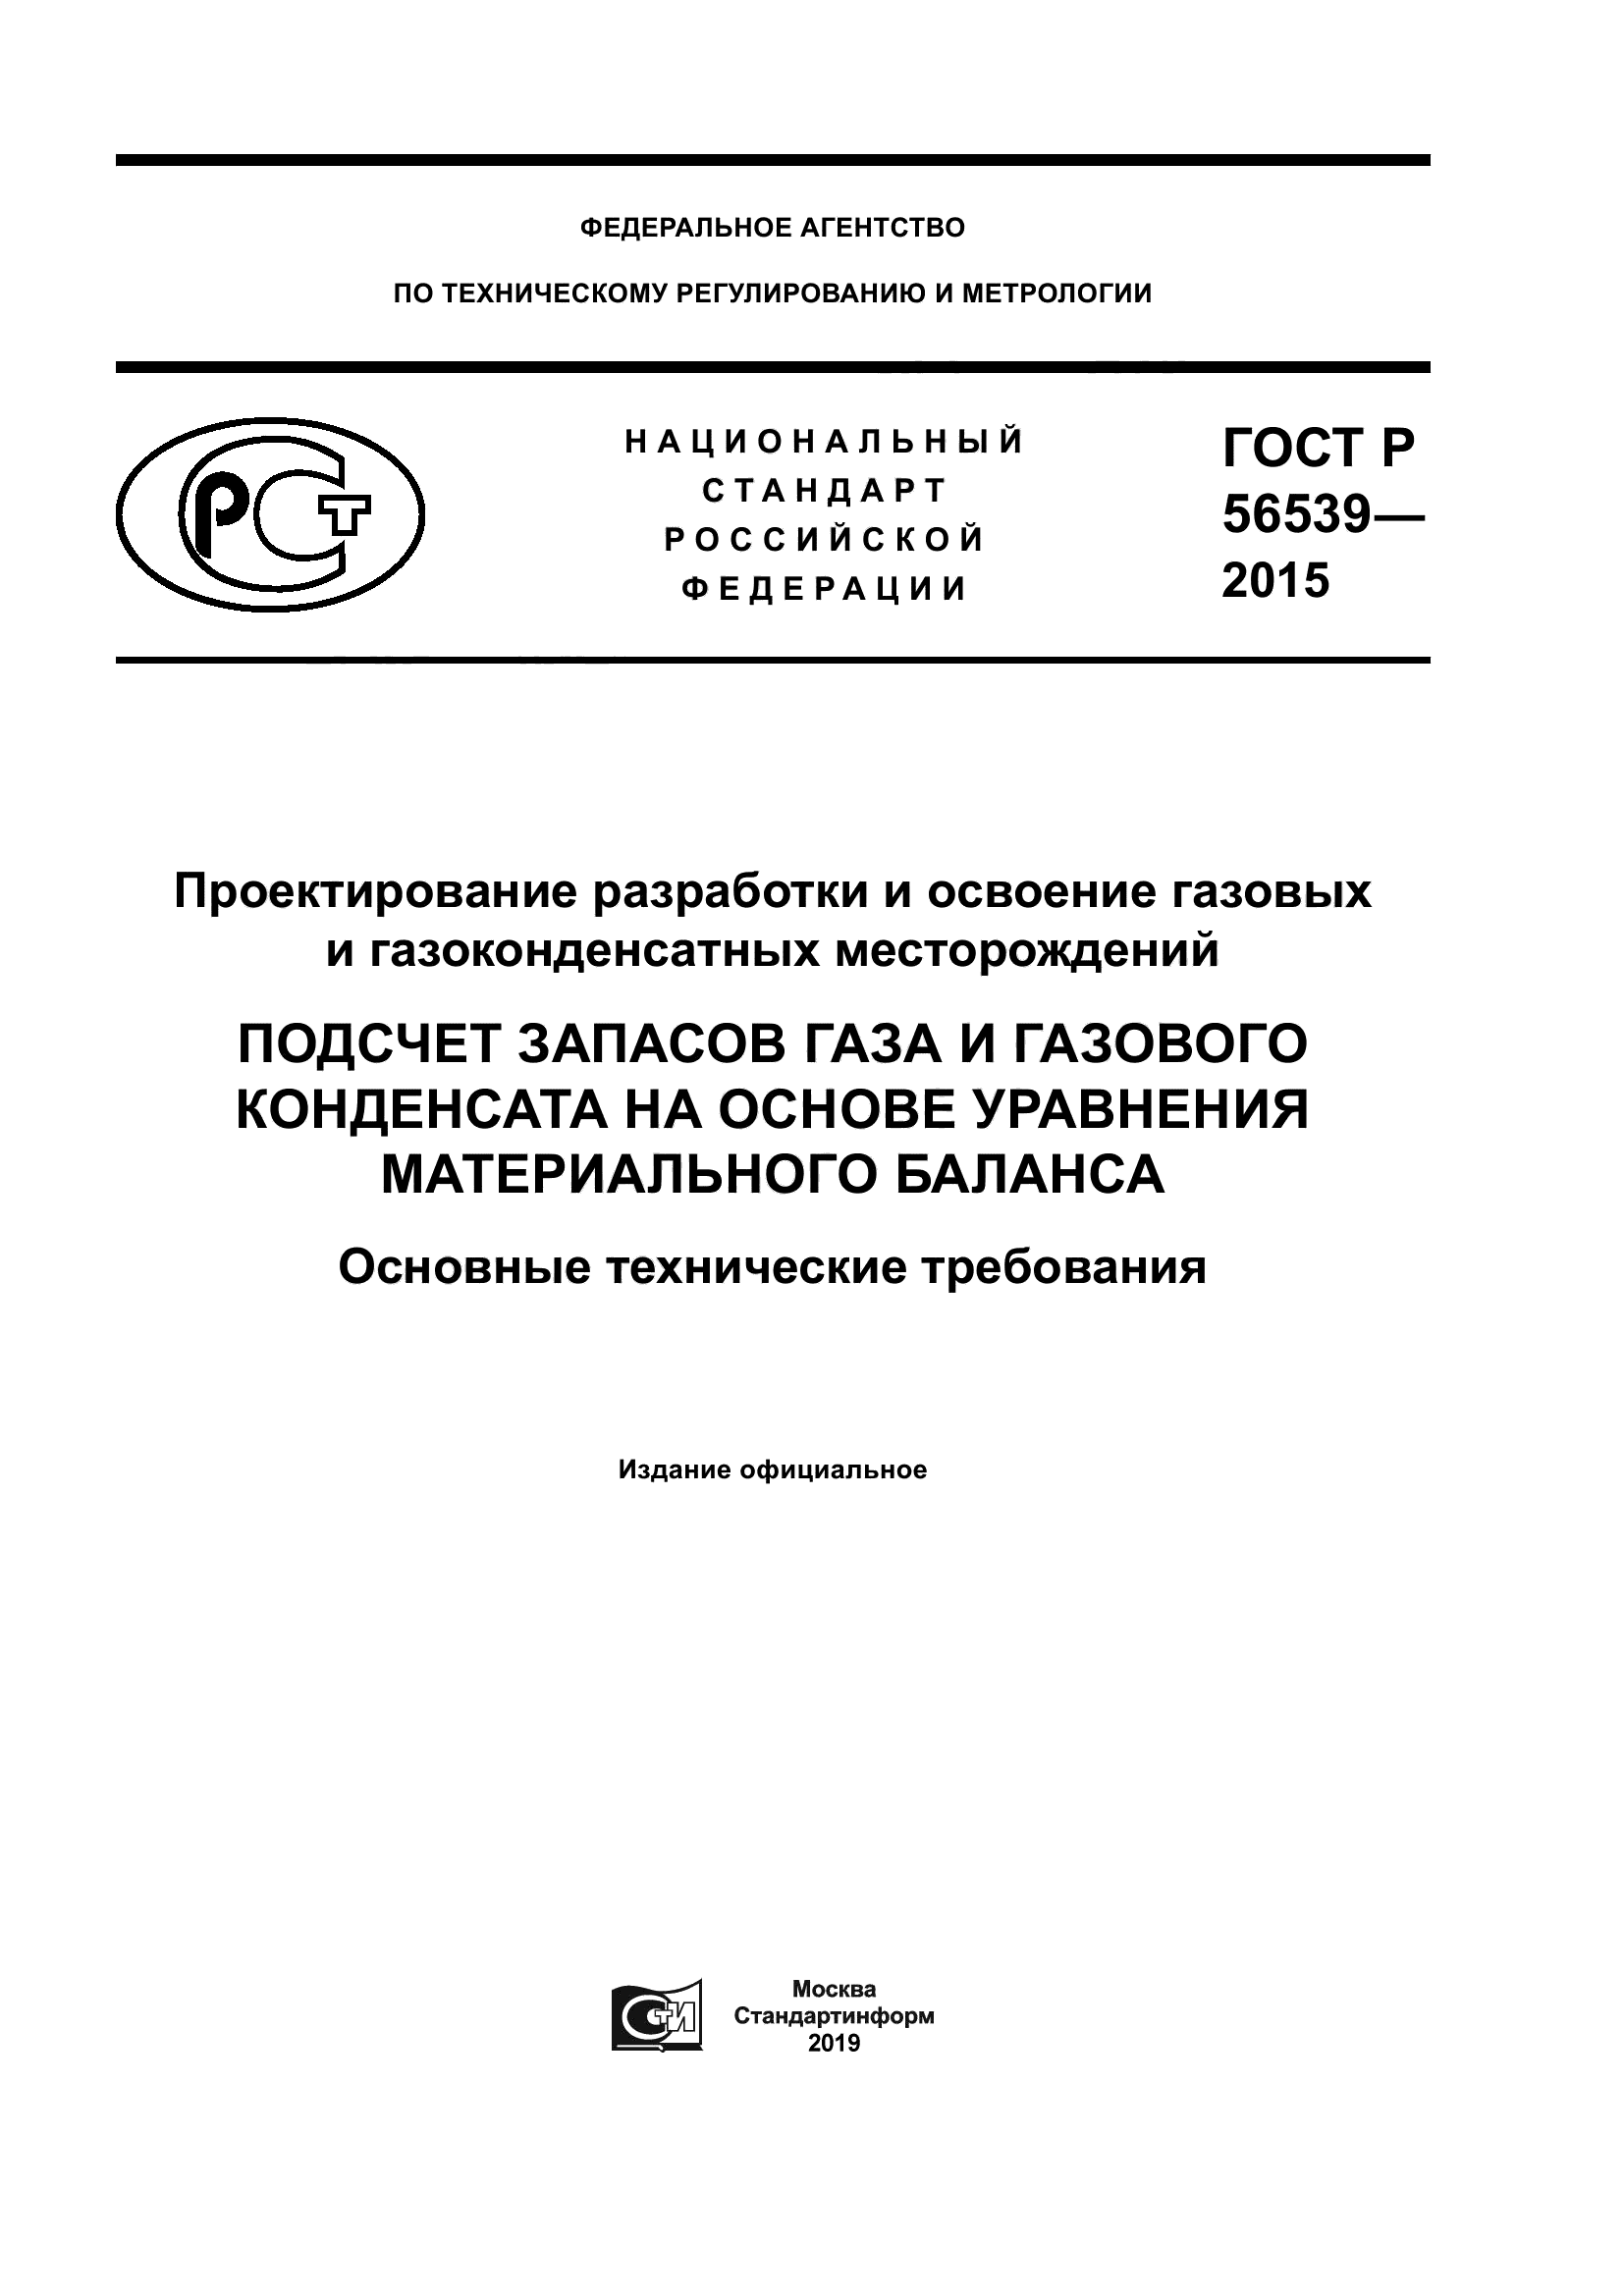 ГОСТ Р 56539-2015